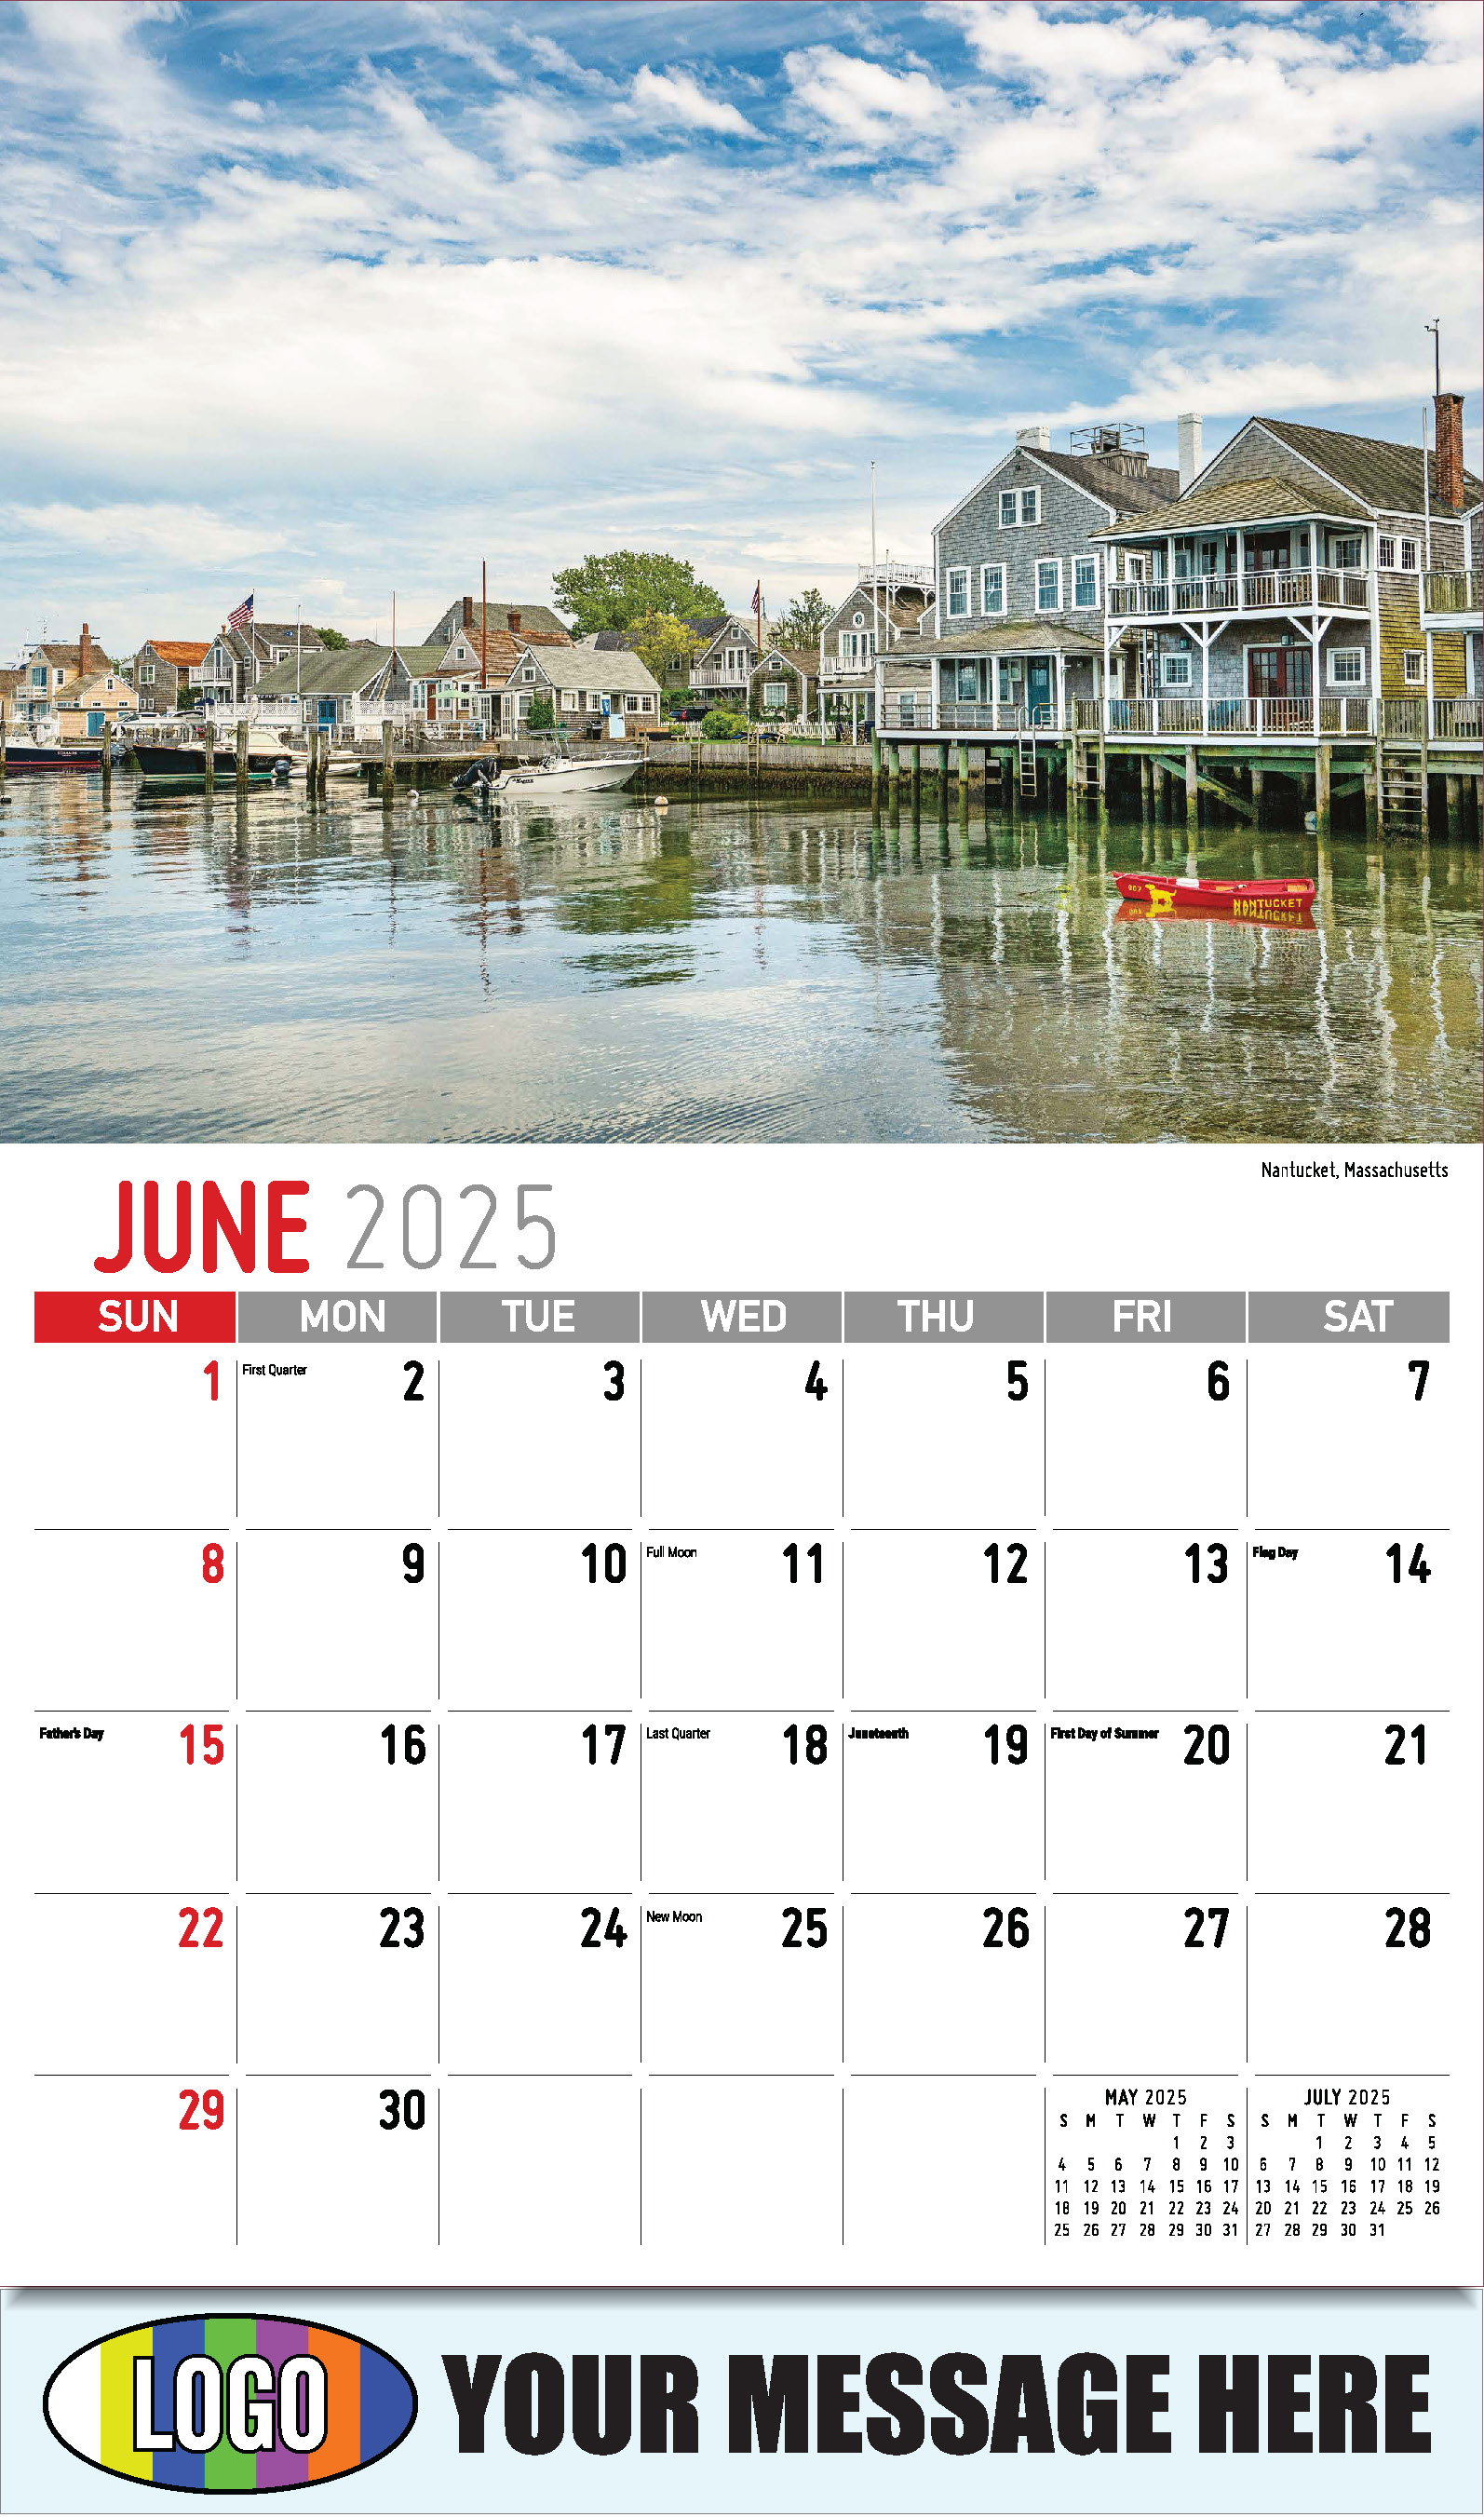 Scenes of New England 2025 Business Advertising Wall Calendar - June